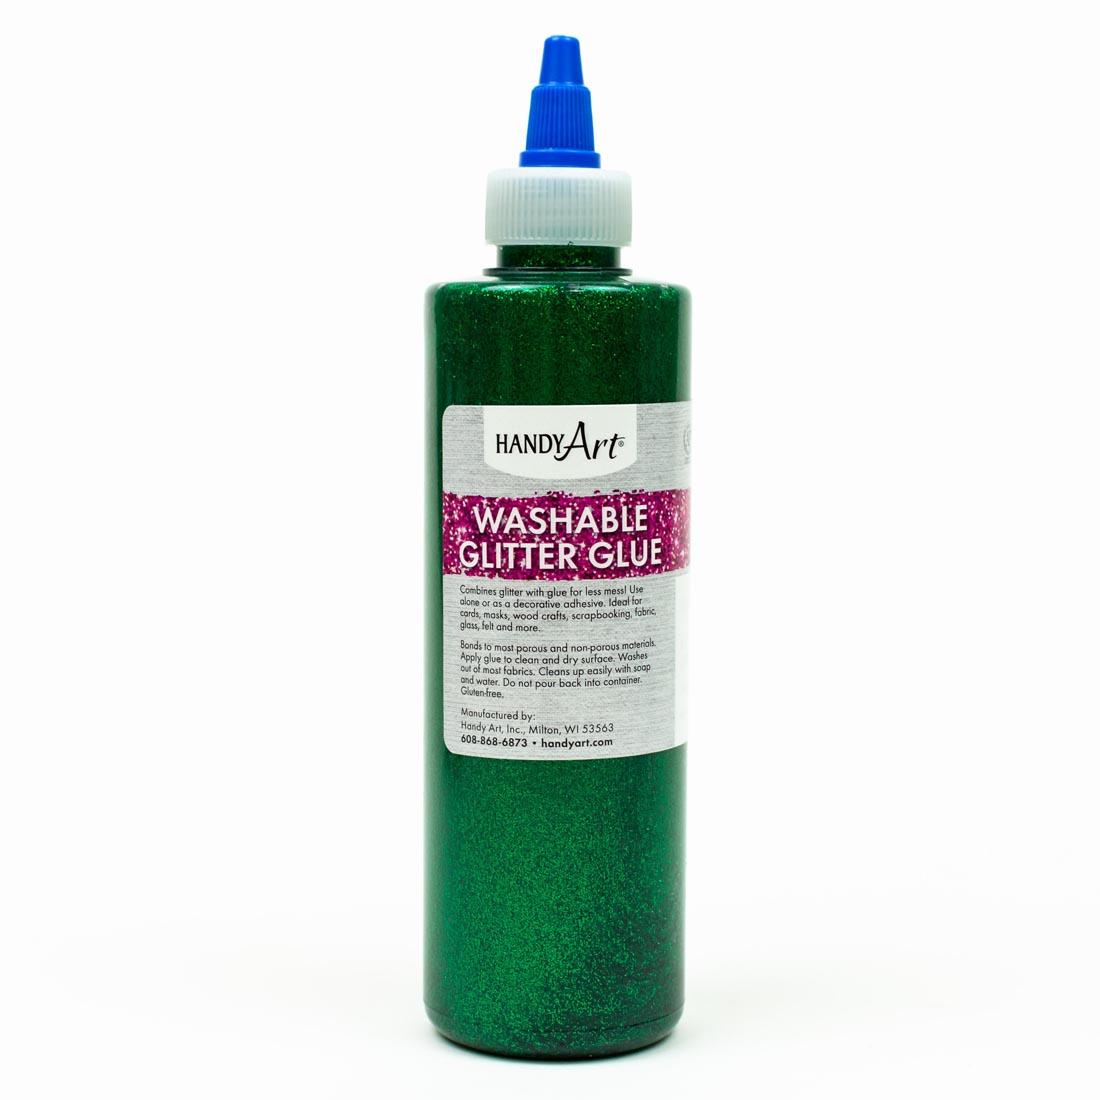 Bottle of Green Handy Art Washable Glitter Glue